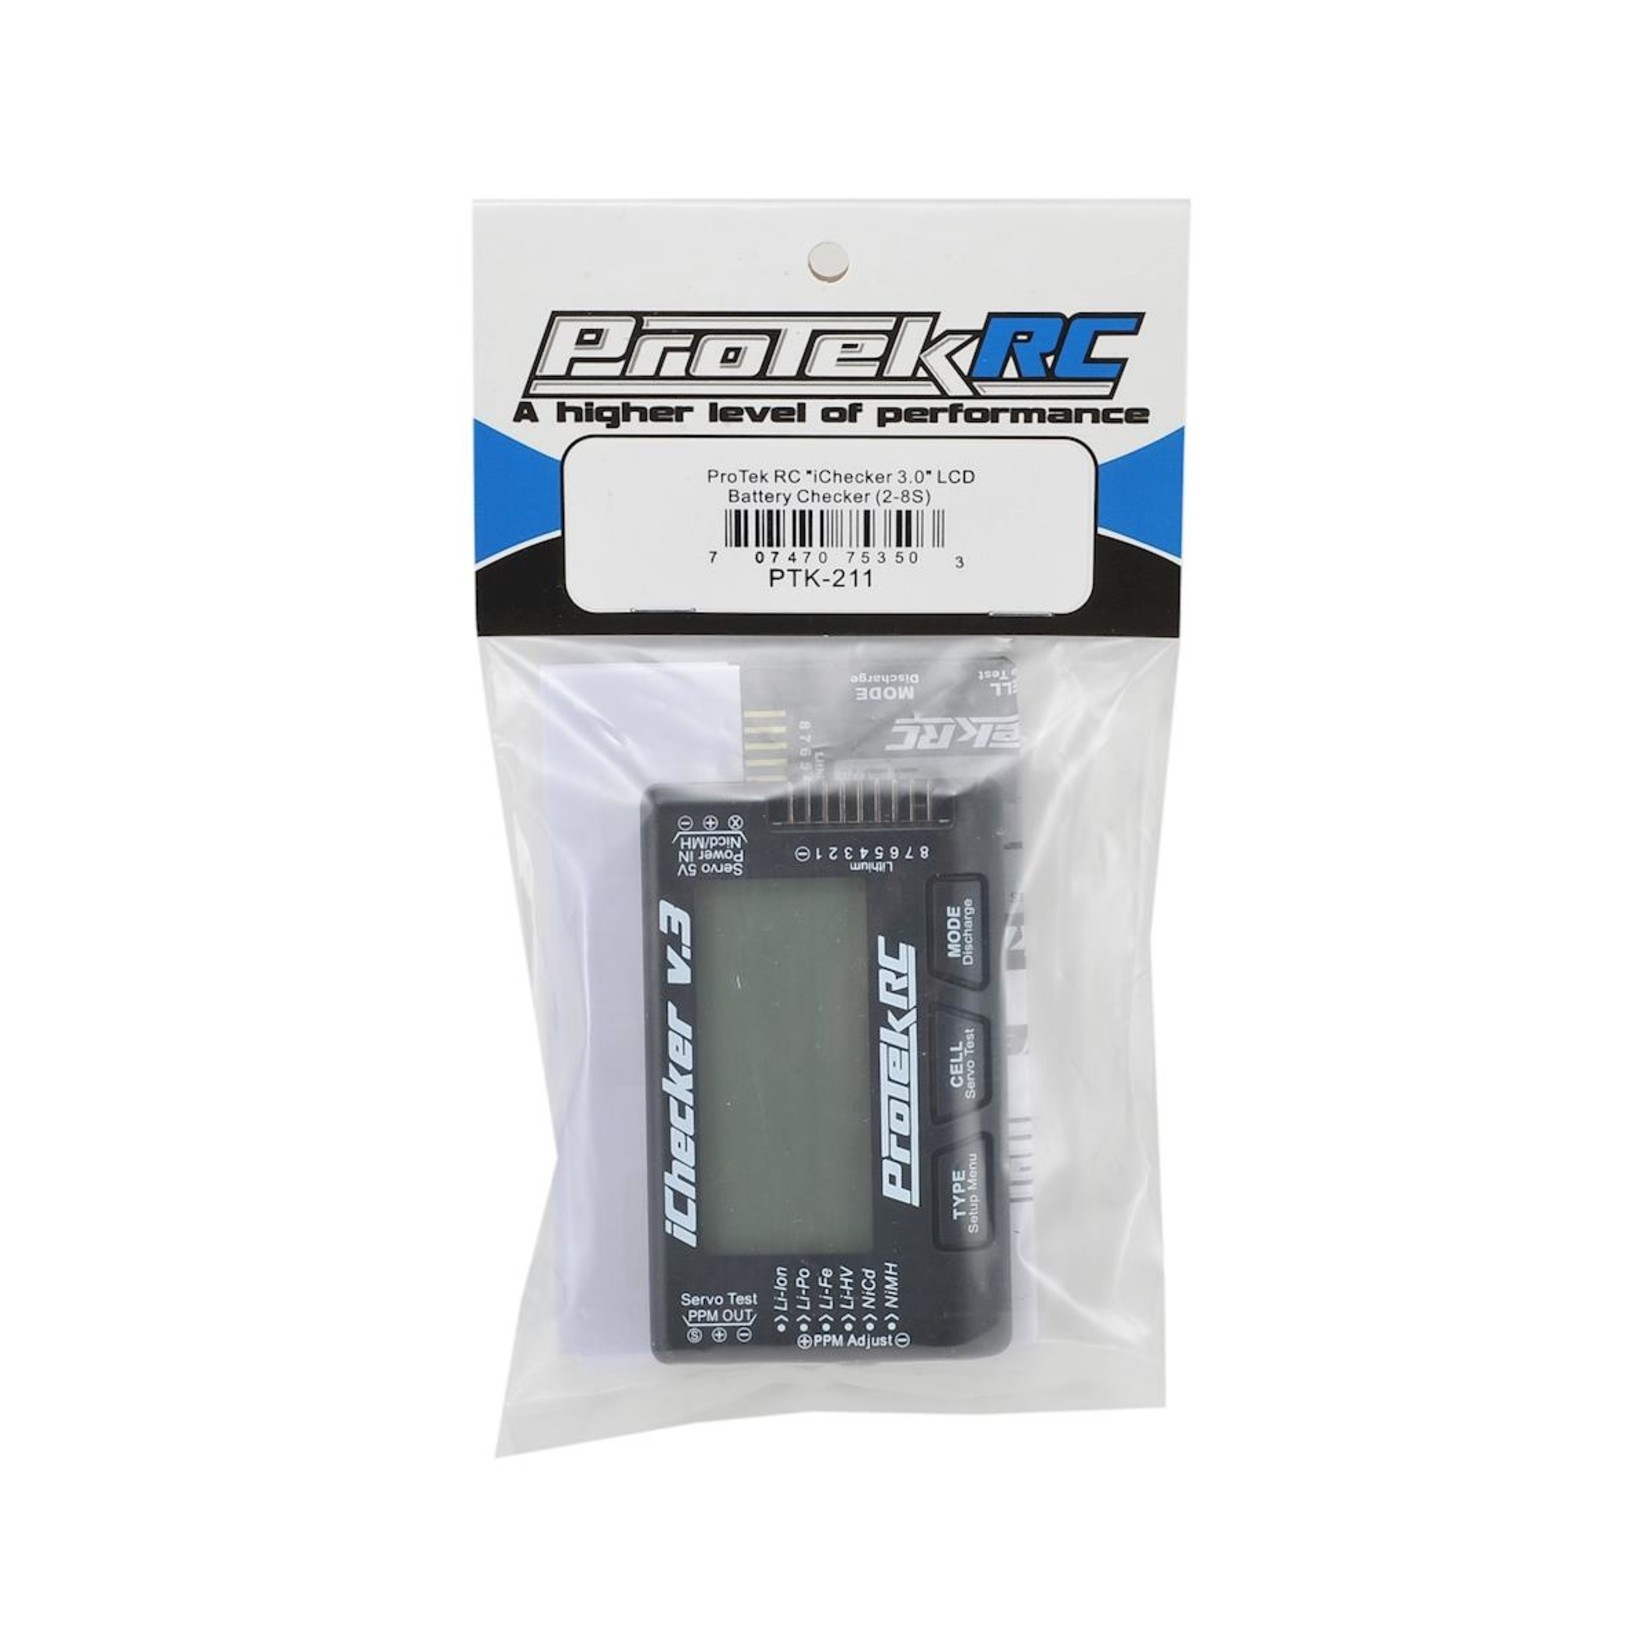 Protek R/C PTK-211 ProTek RC "iChecker 3.0" LCD LiPo Battery Cell Checker (2-8S)